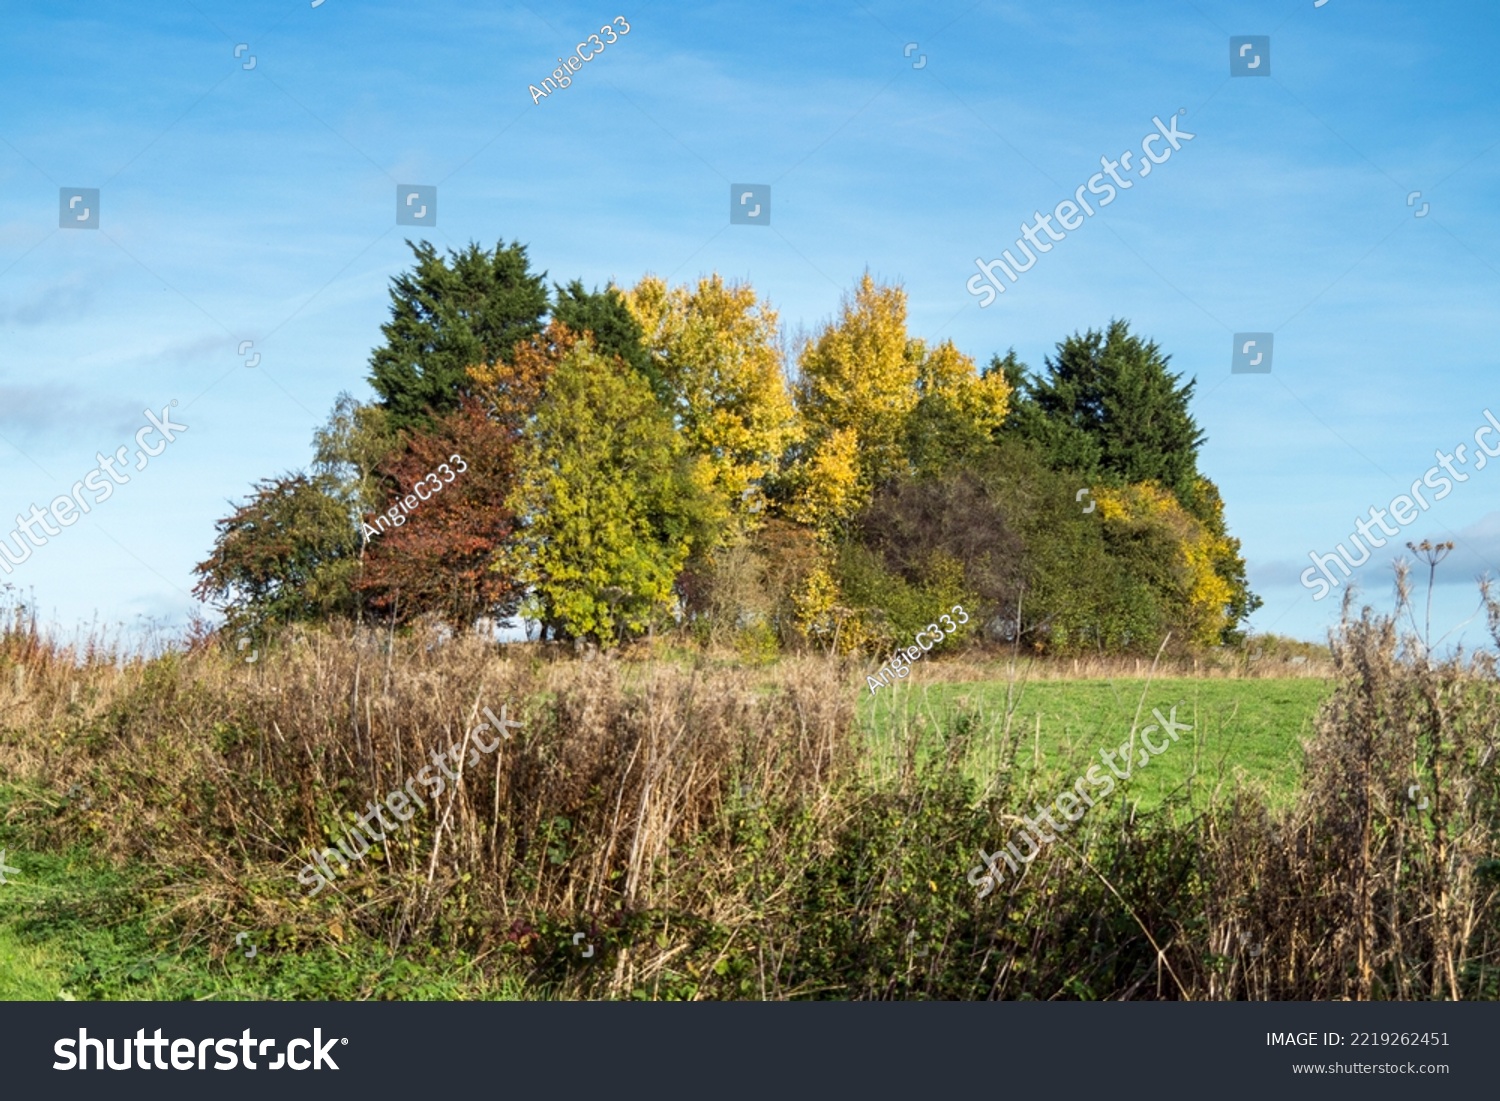 Copse of trees with beautiful autumn foliage #2219262451